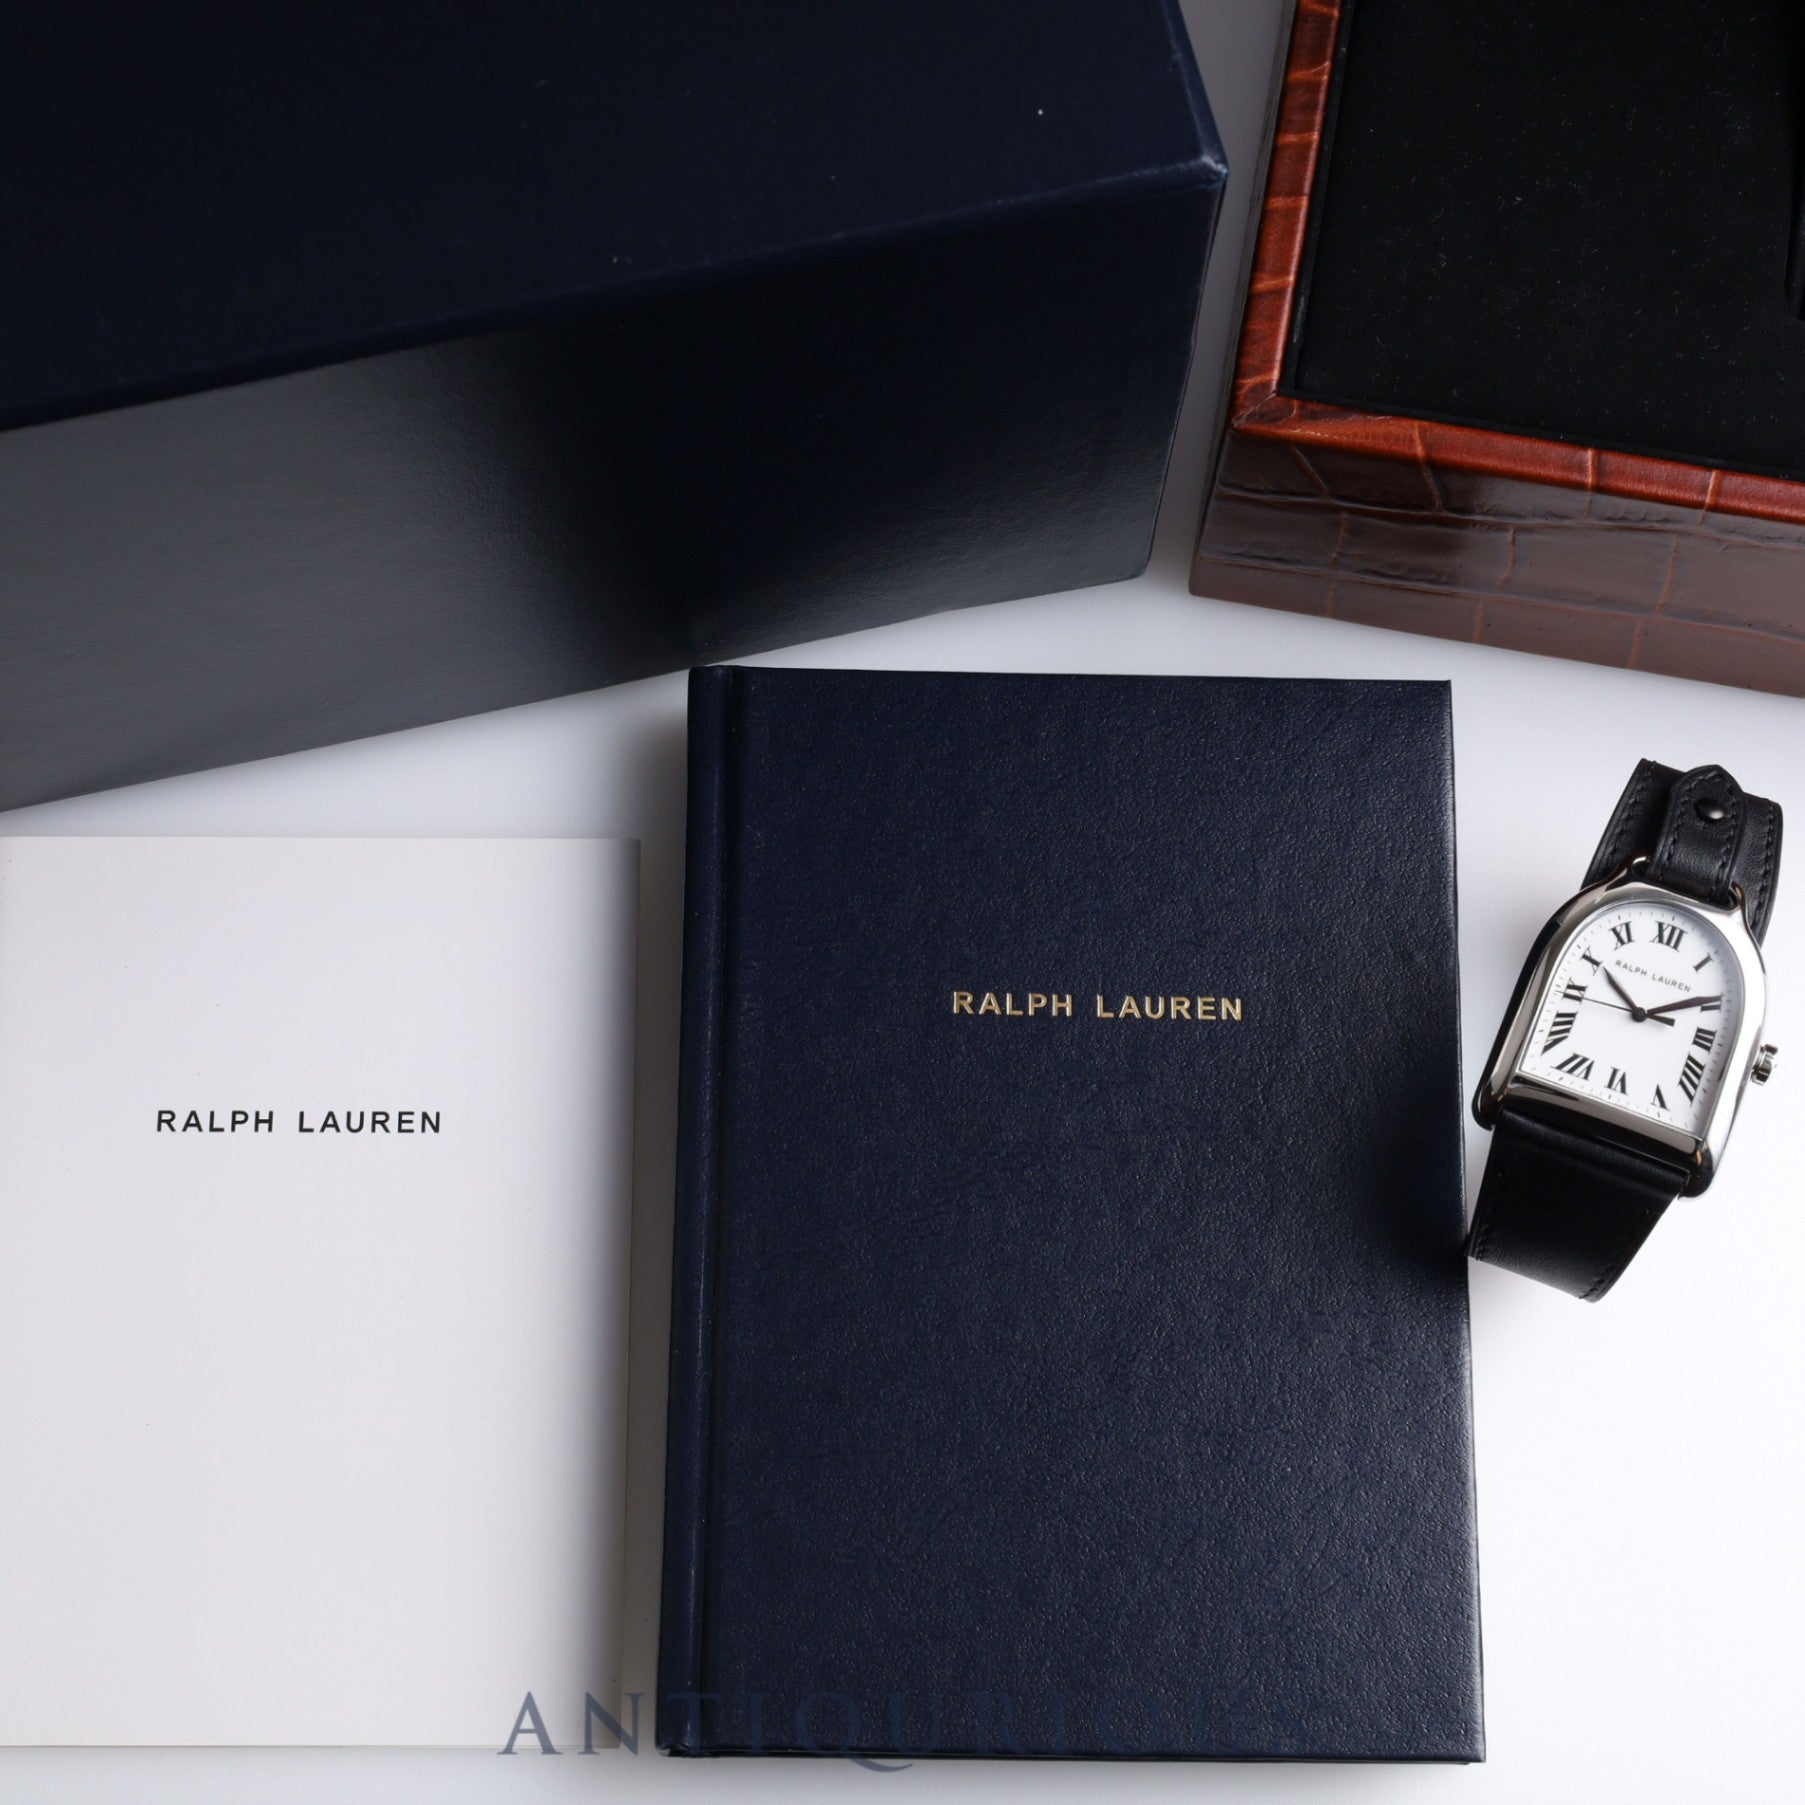 RALPH LAUREN(ラルフ ローレン)の中古腕時計一覧 | 東京銀座のヴィンテージウォッチ専門店 - ANTIQURIOUS(アンティキュリオス)